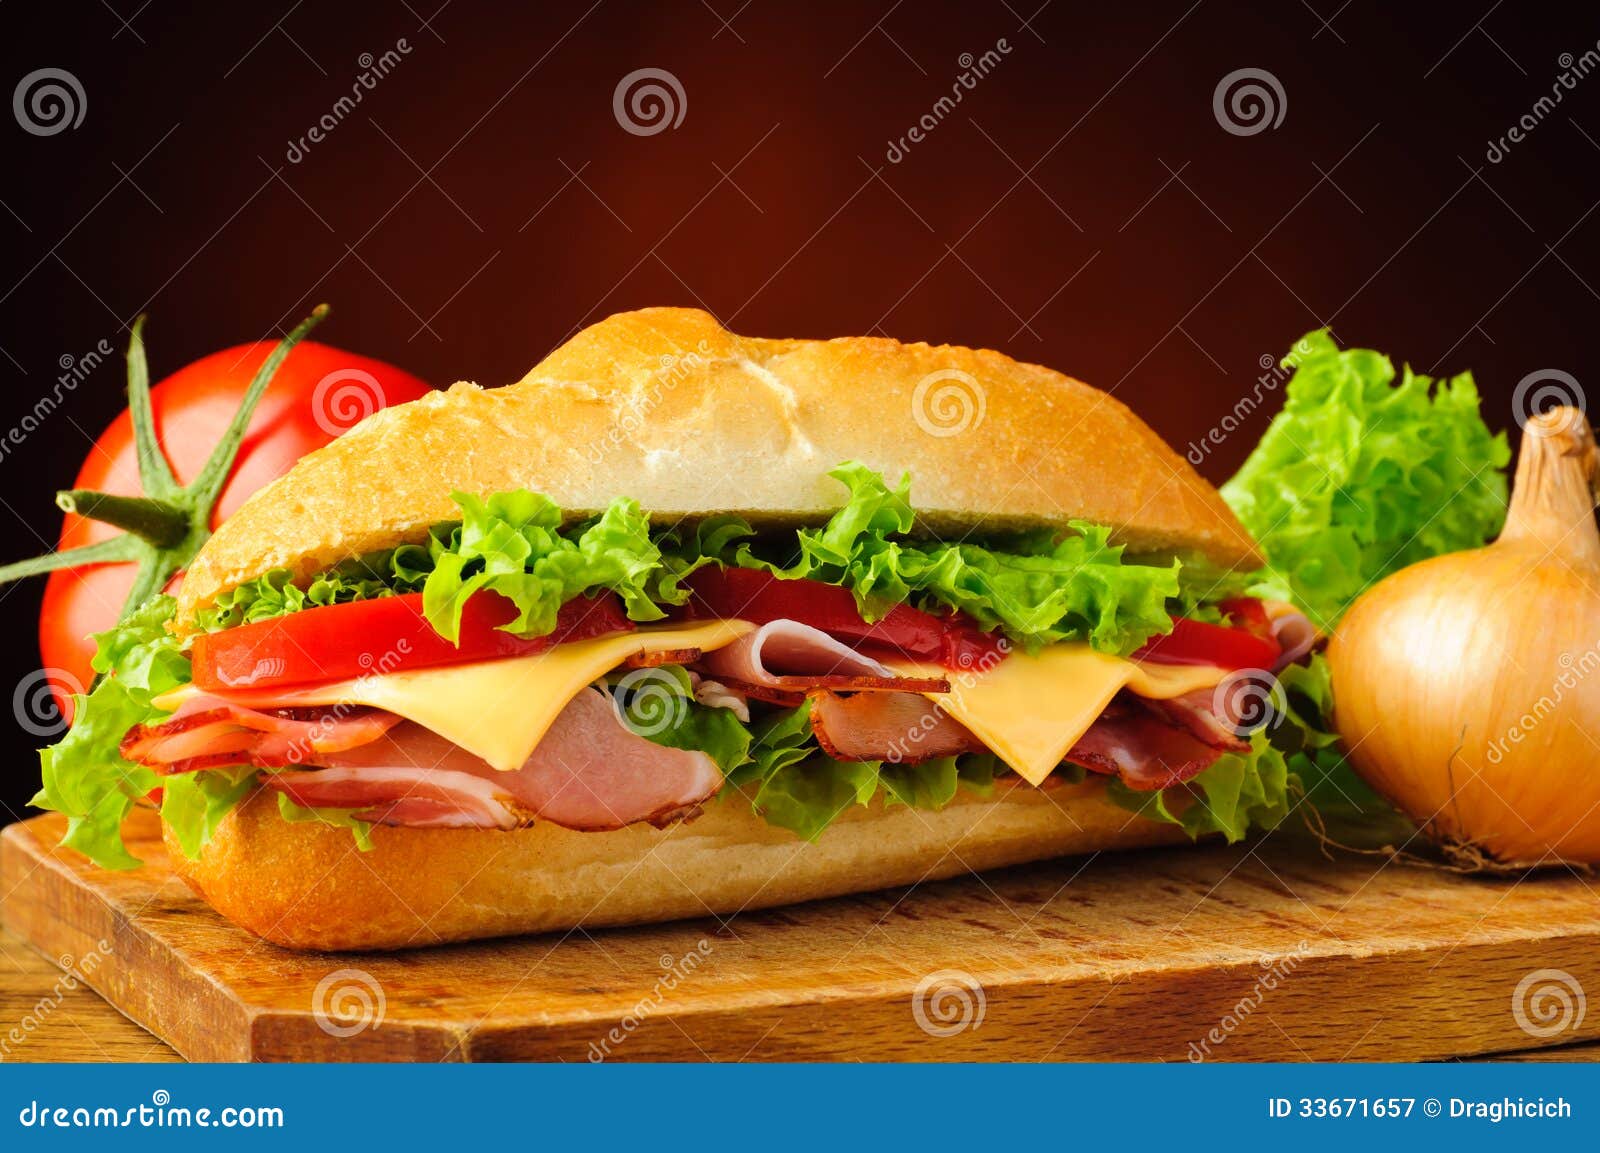 deli sub sandwich and vegetables